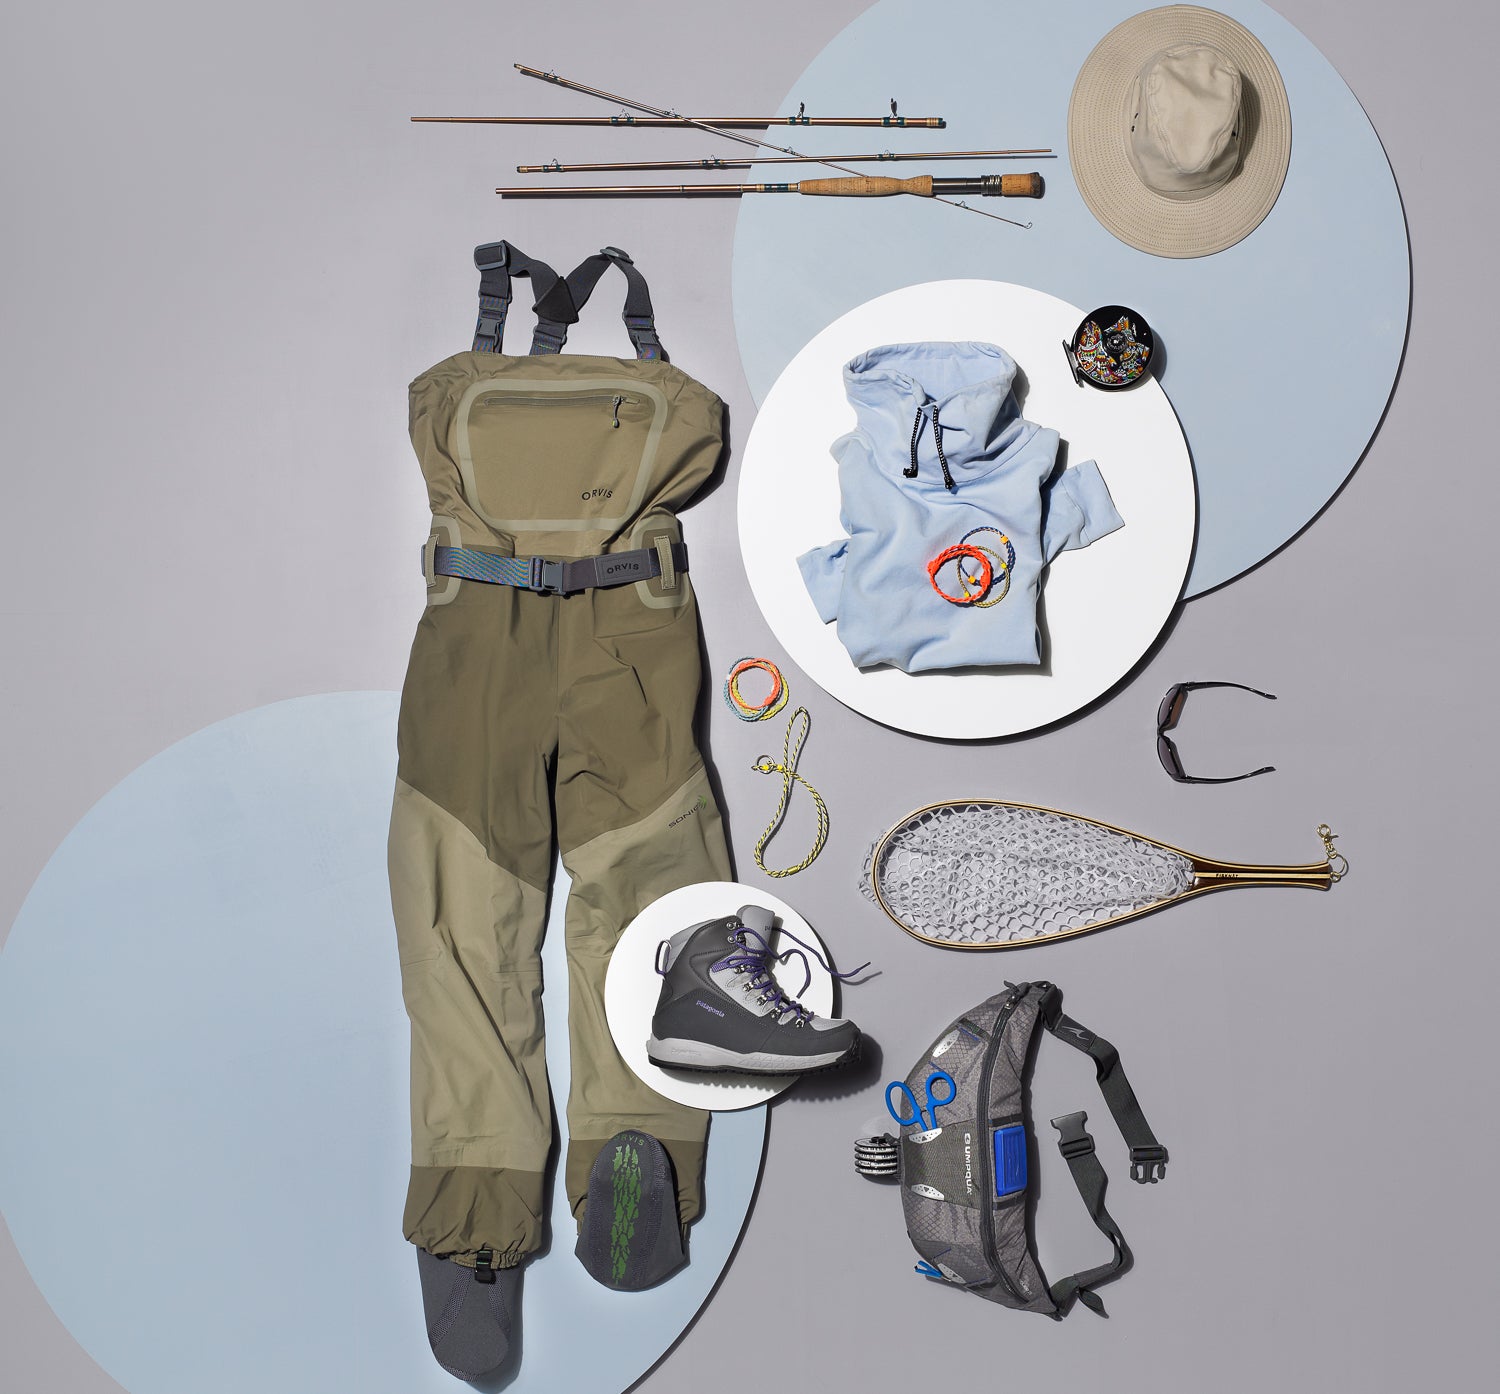 Fishing, Fishing Equipment and Clothing